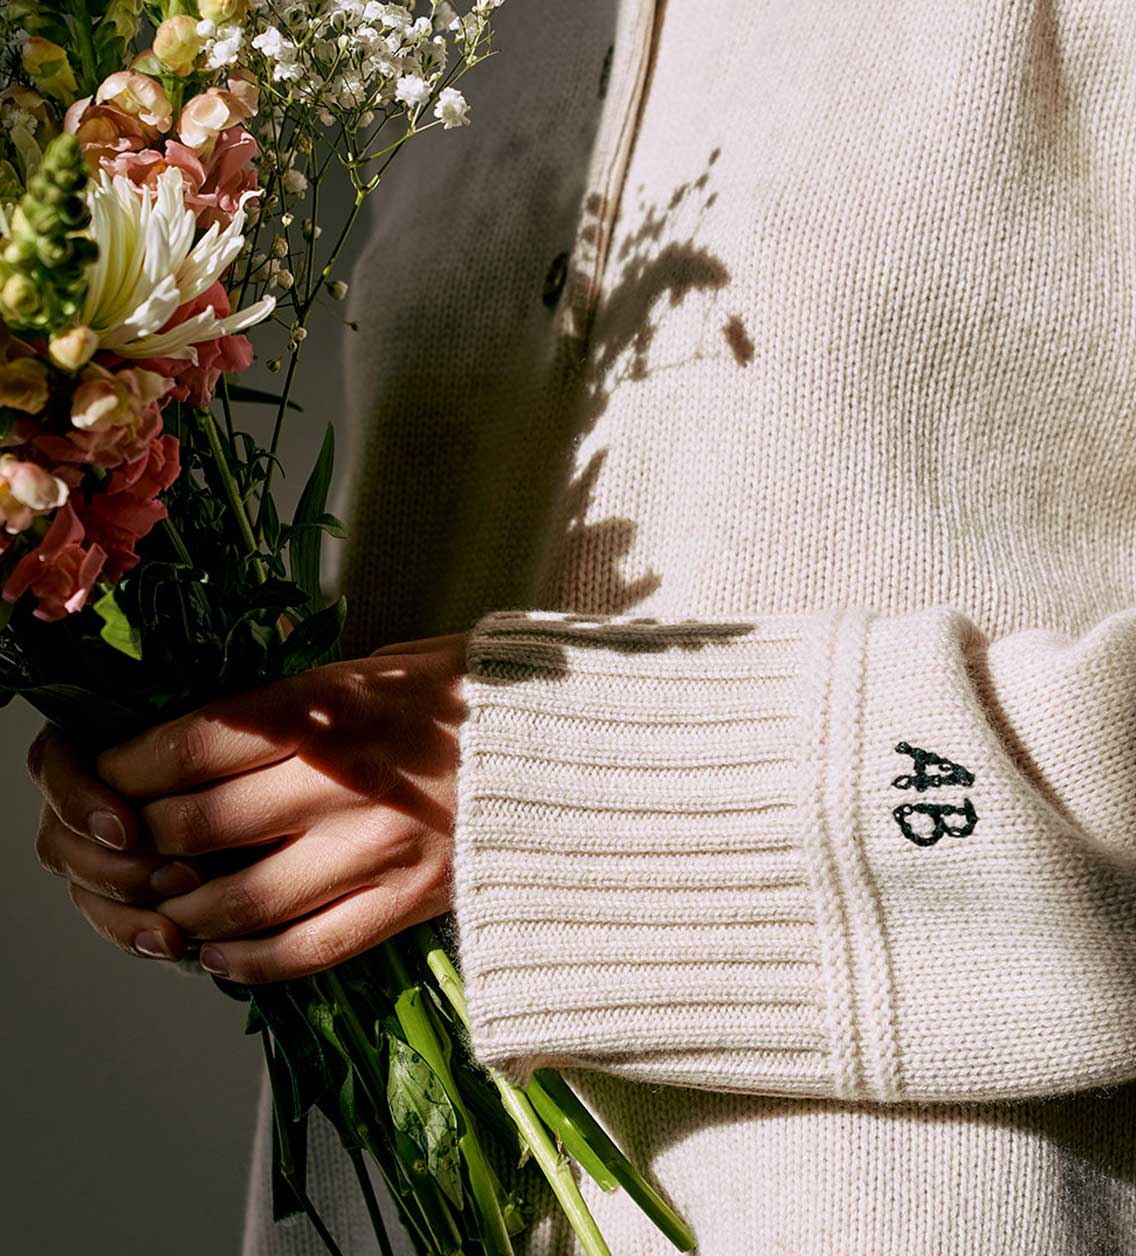 flower monogram sweater